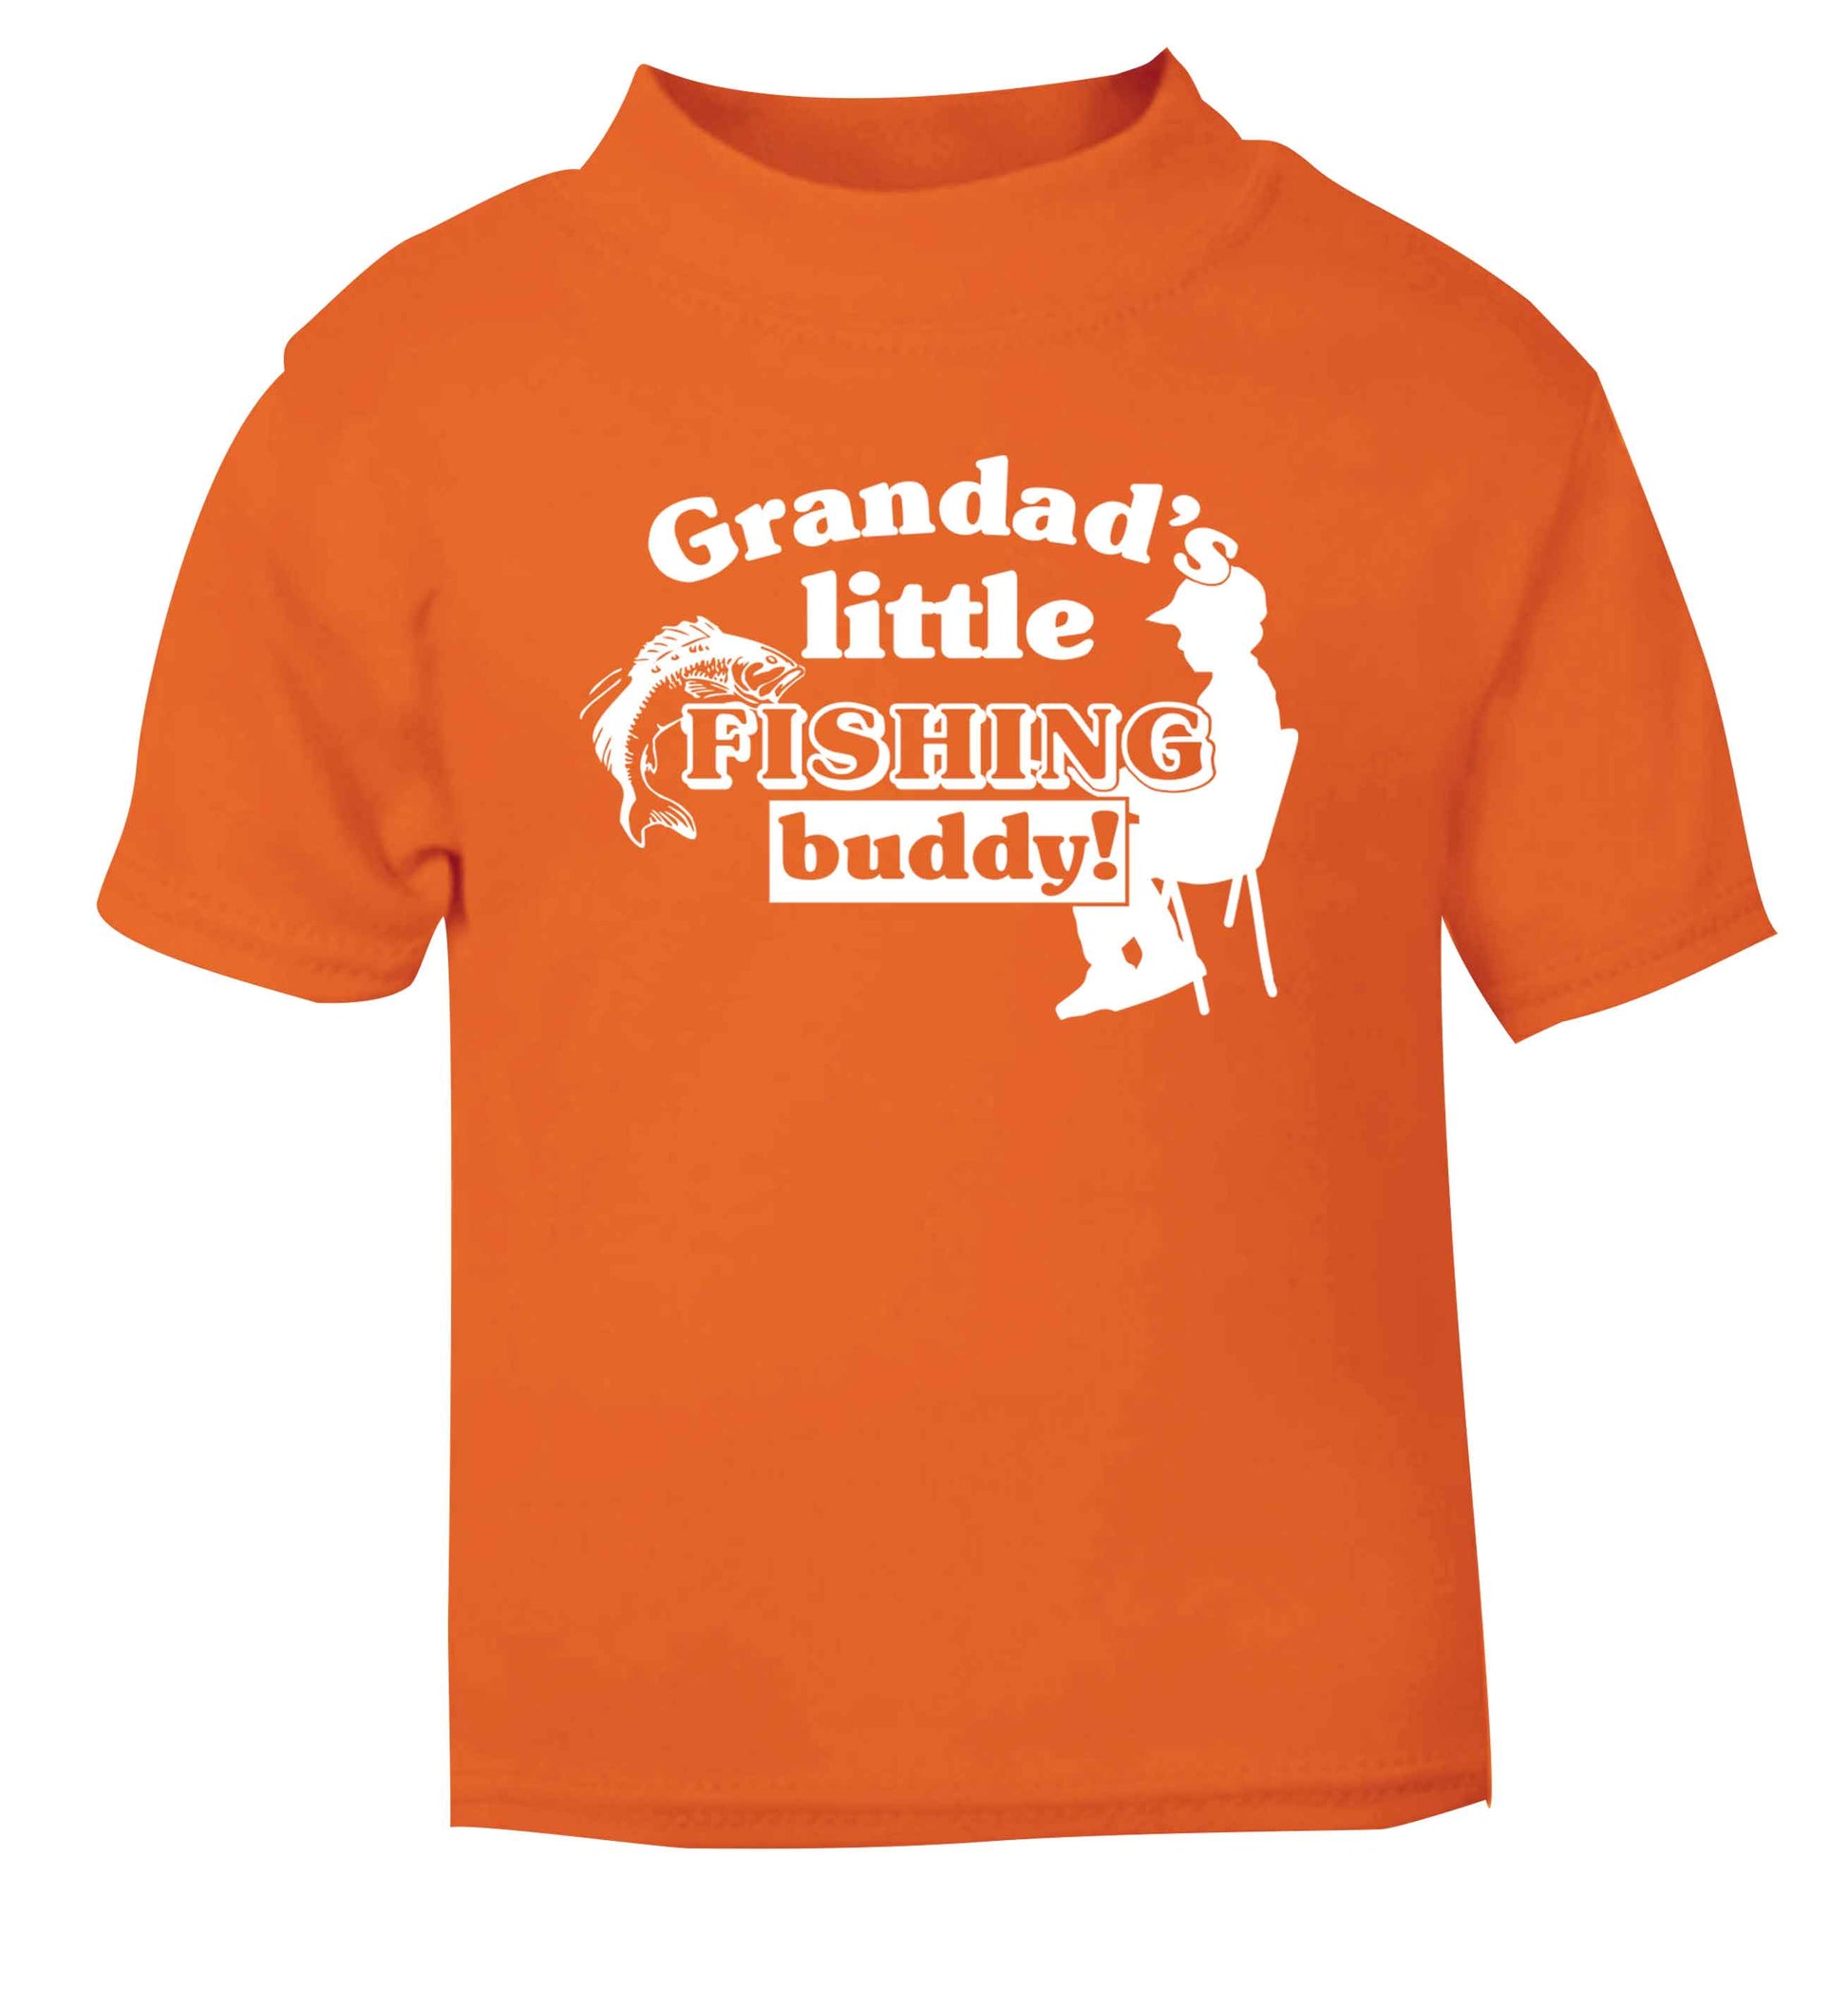 Grandad's little fishing buddy! orange Baby Toddler Tshirt 2 Years